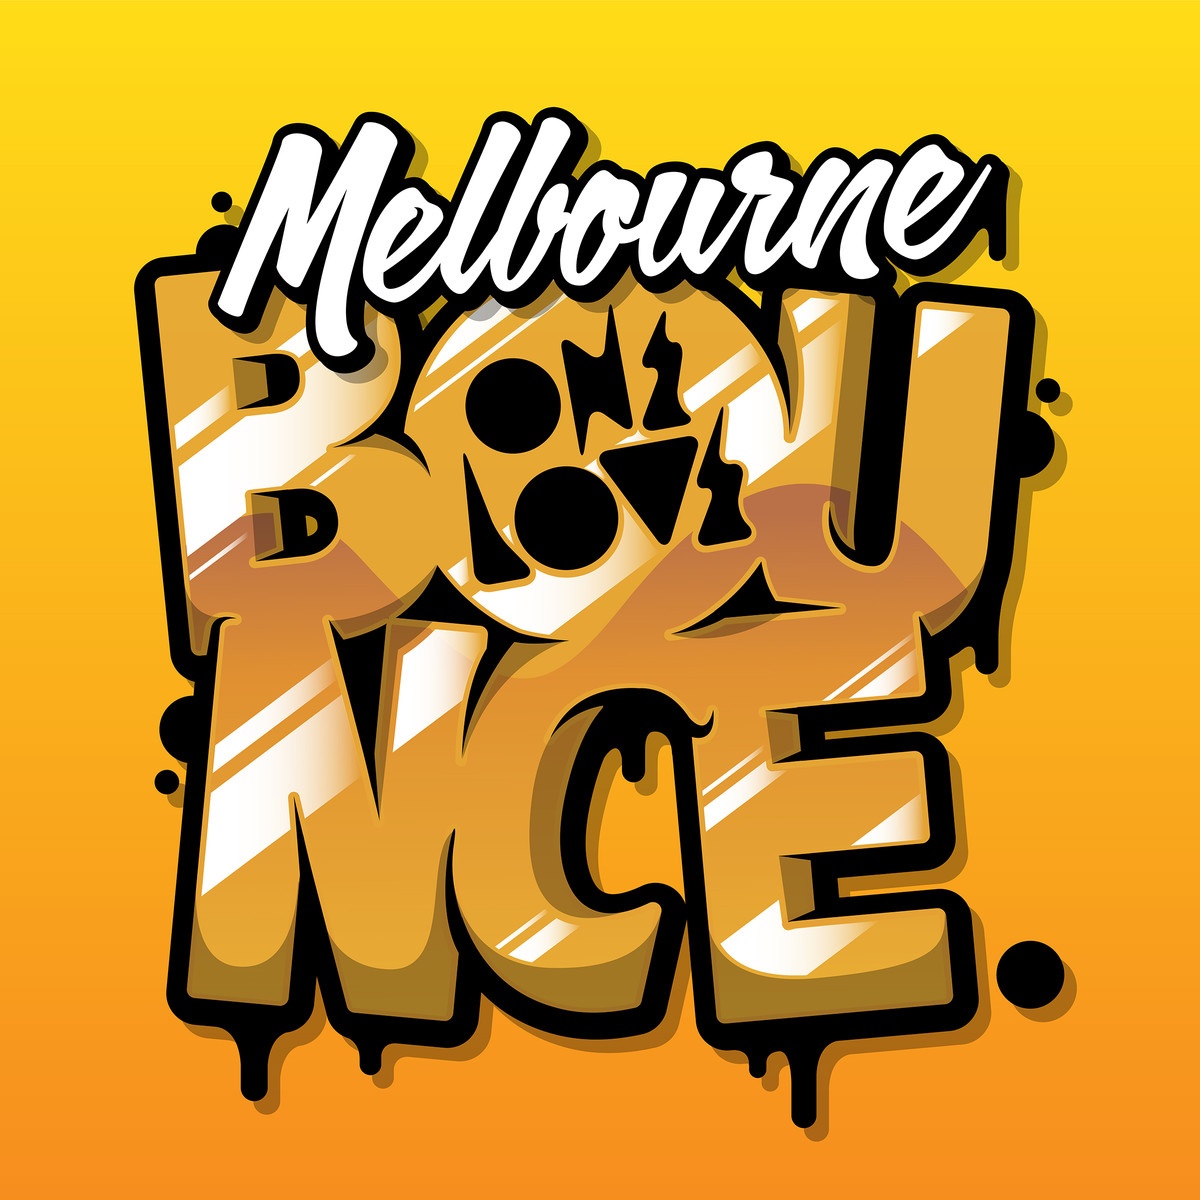 Melbourne Bounce (Deorro Remix)